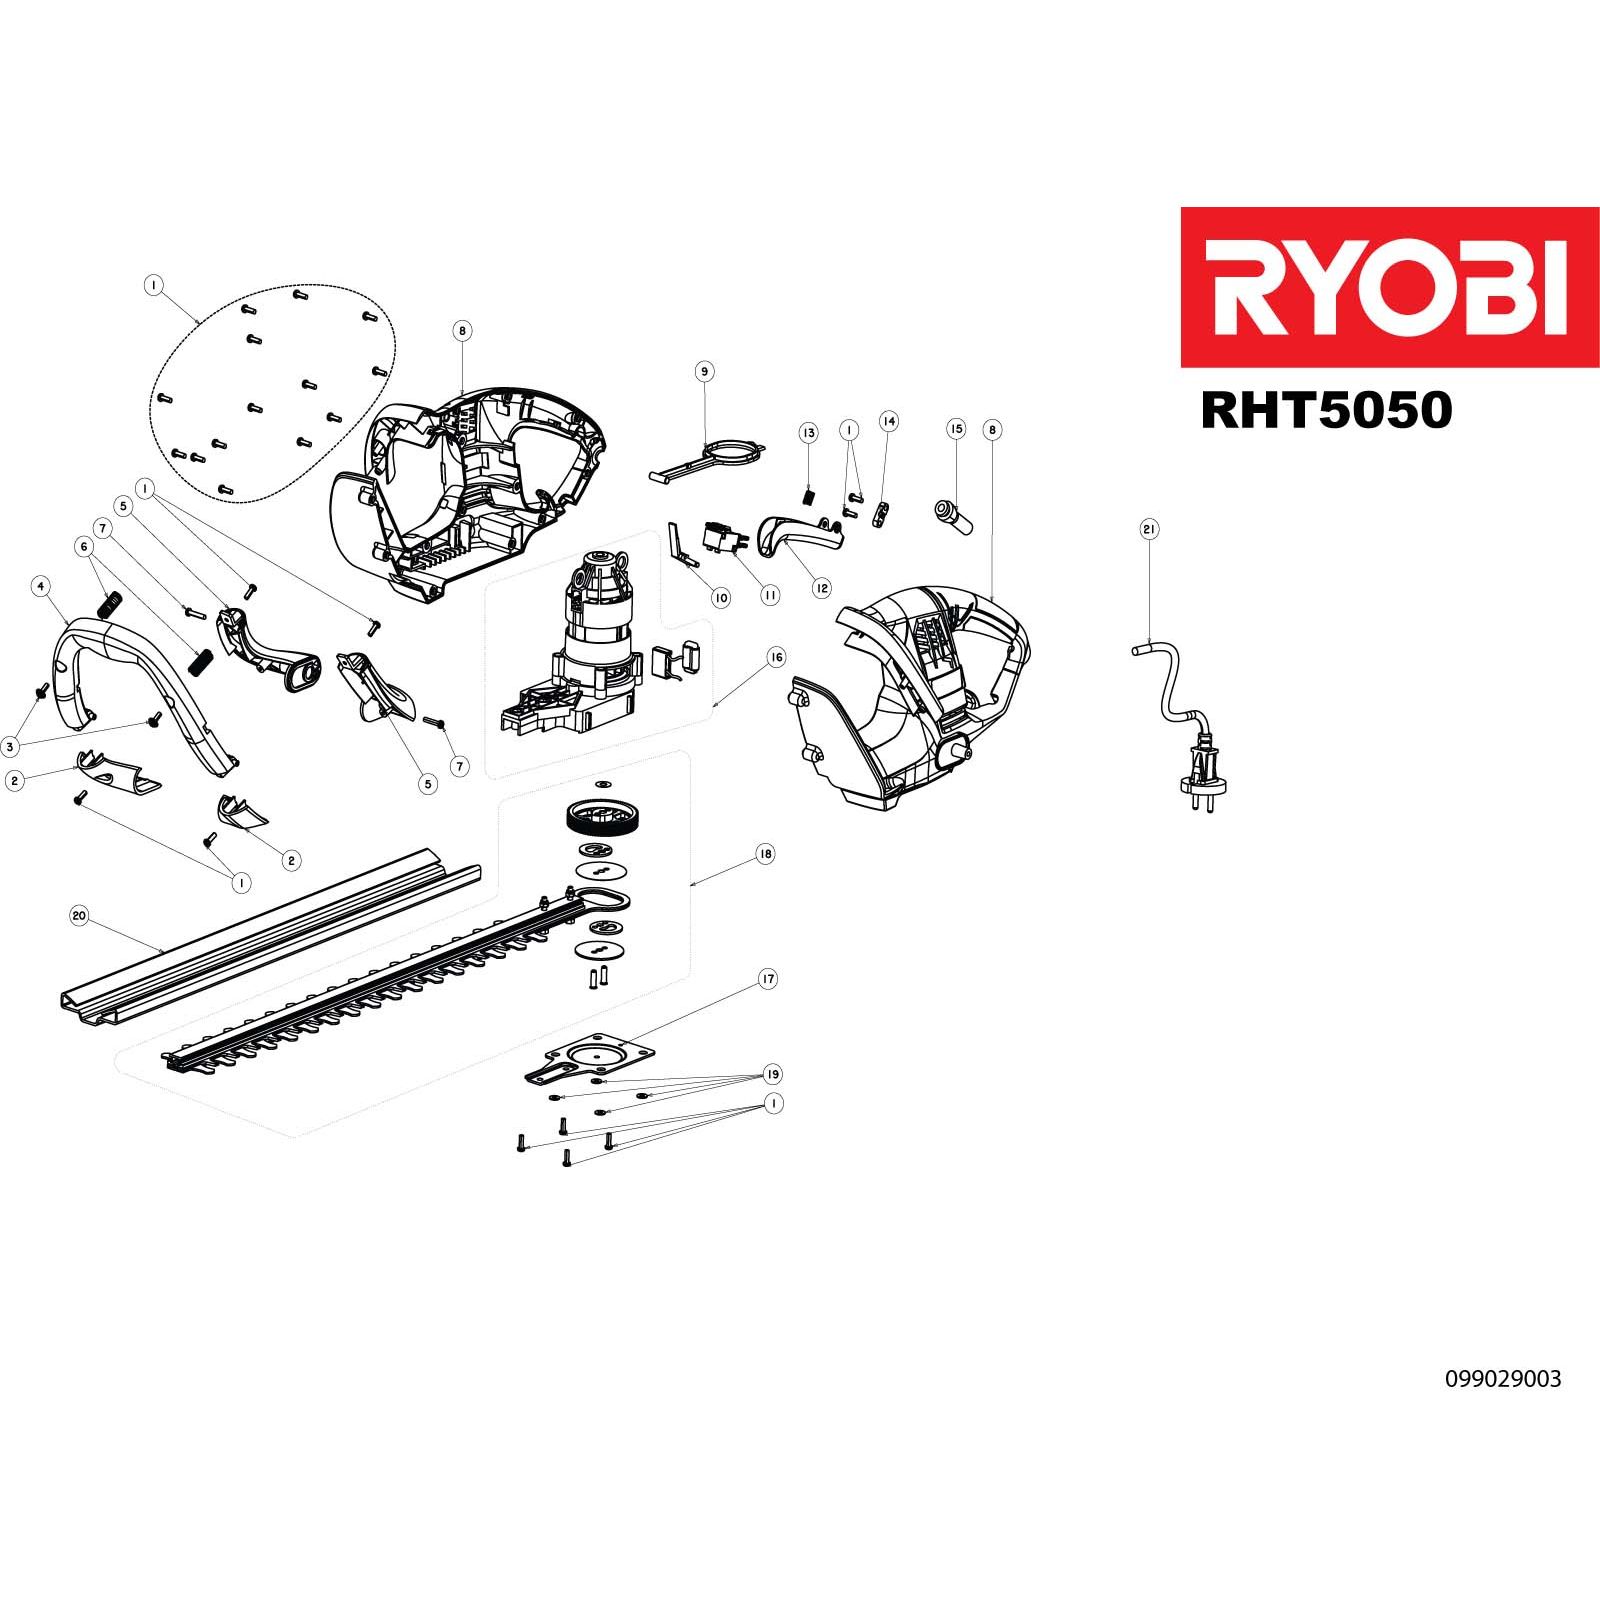 Ryobi Hedge Trimmer Parts List